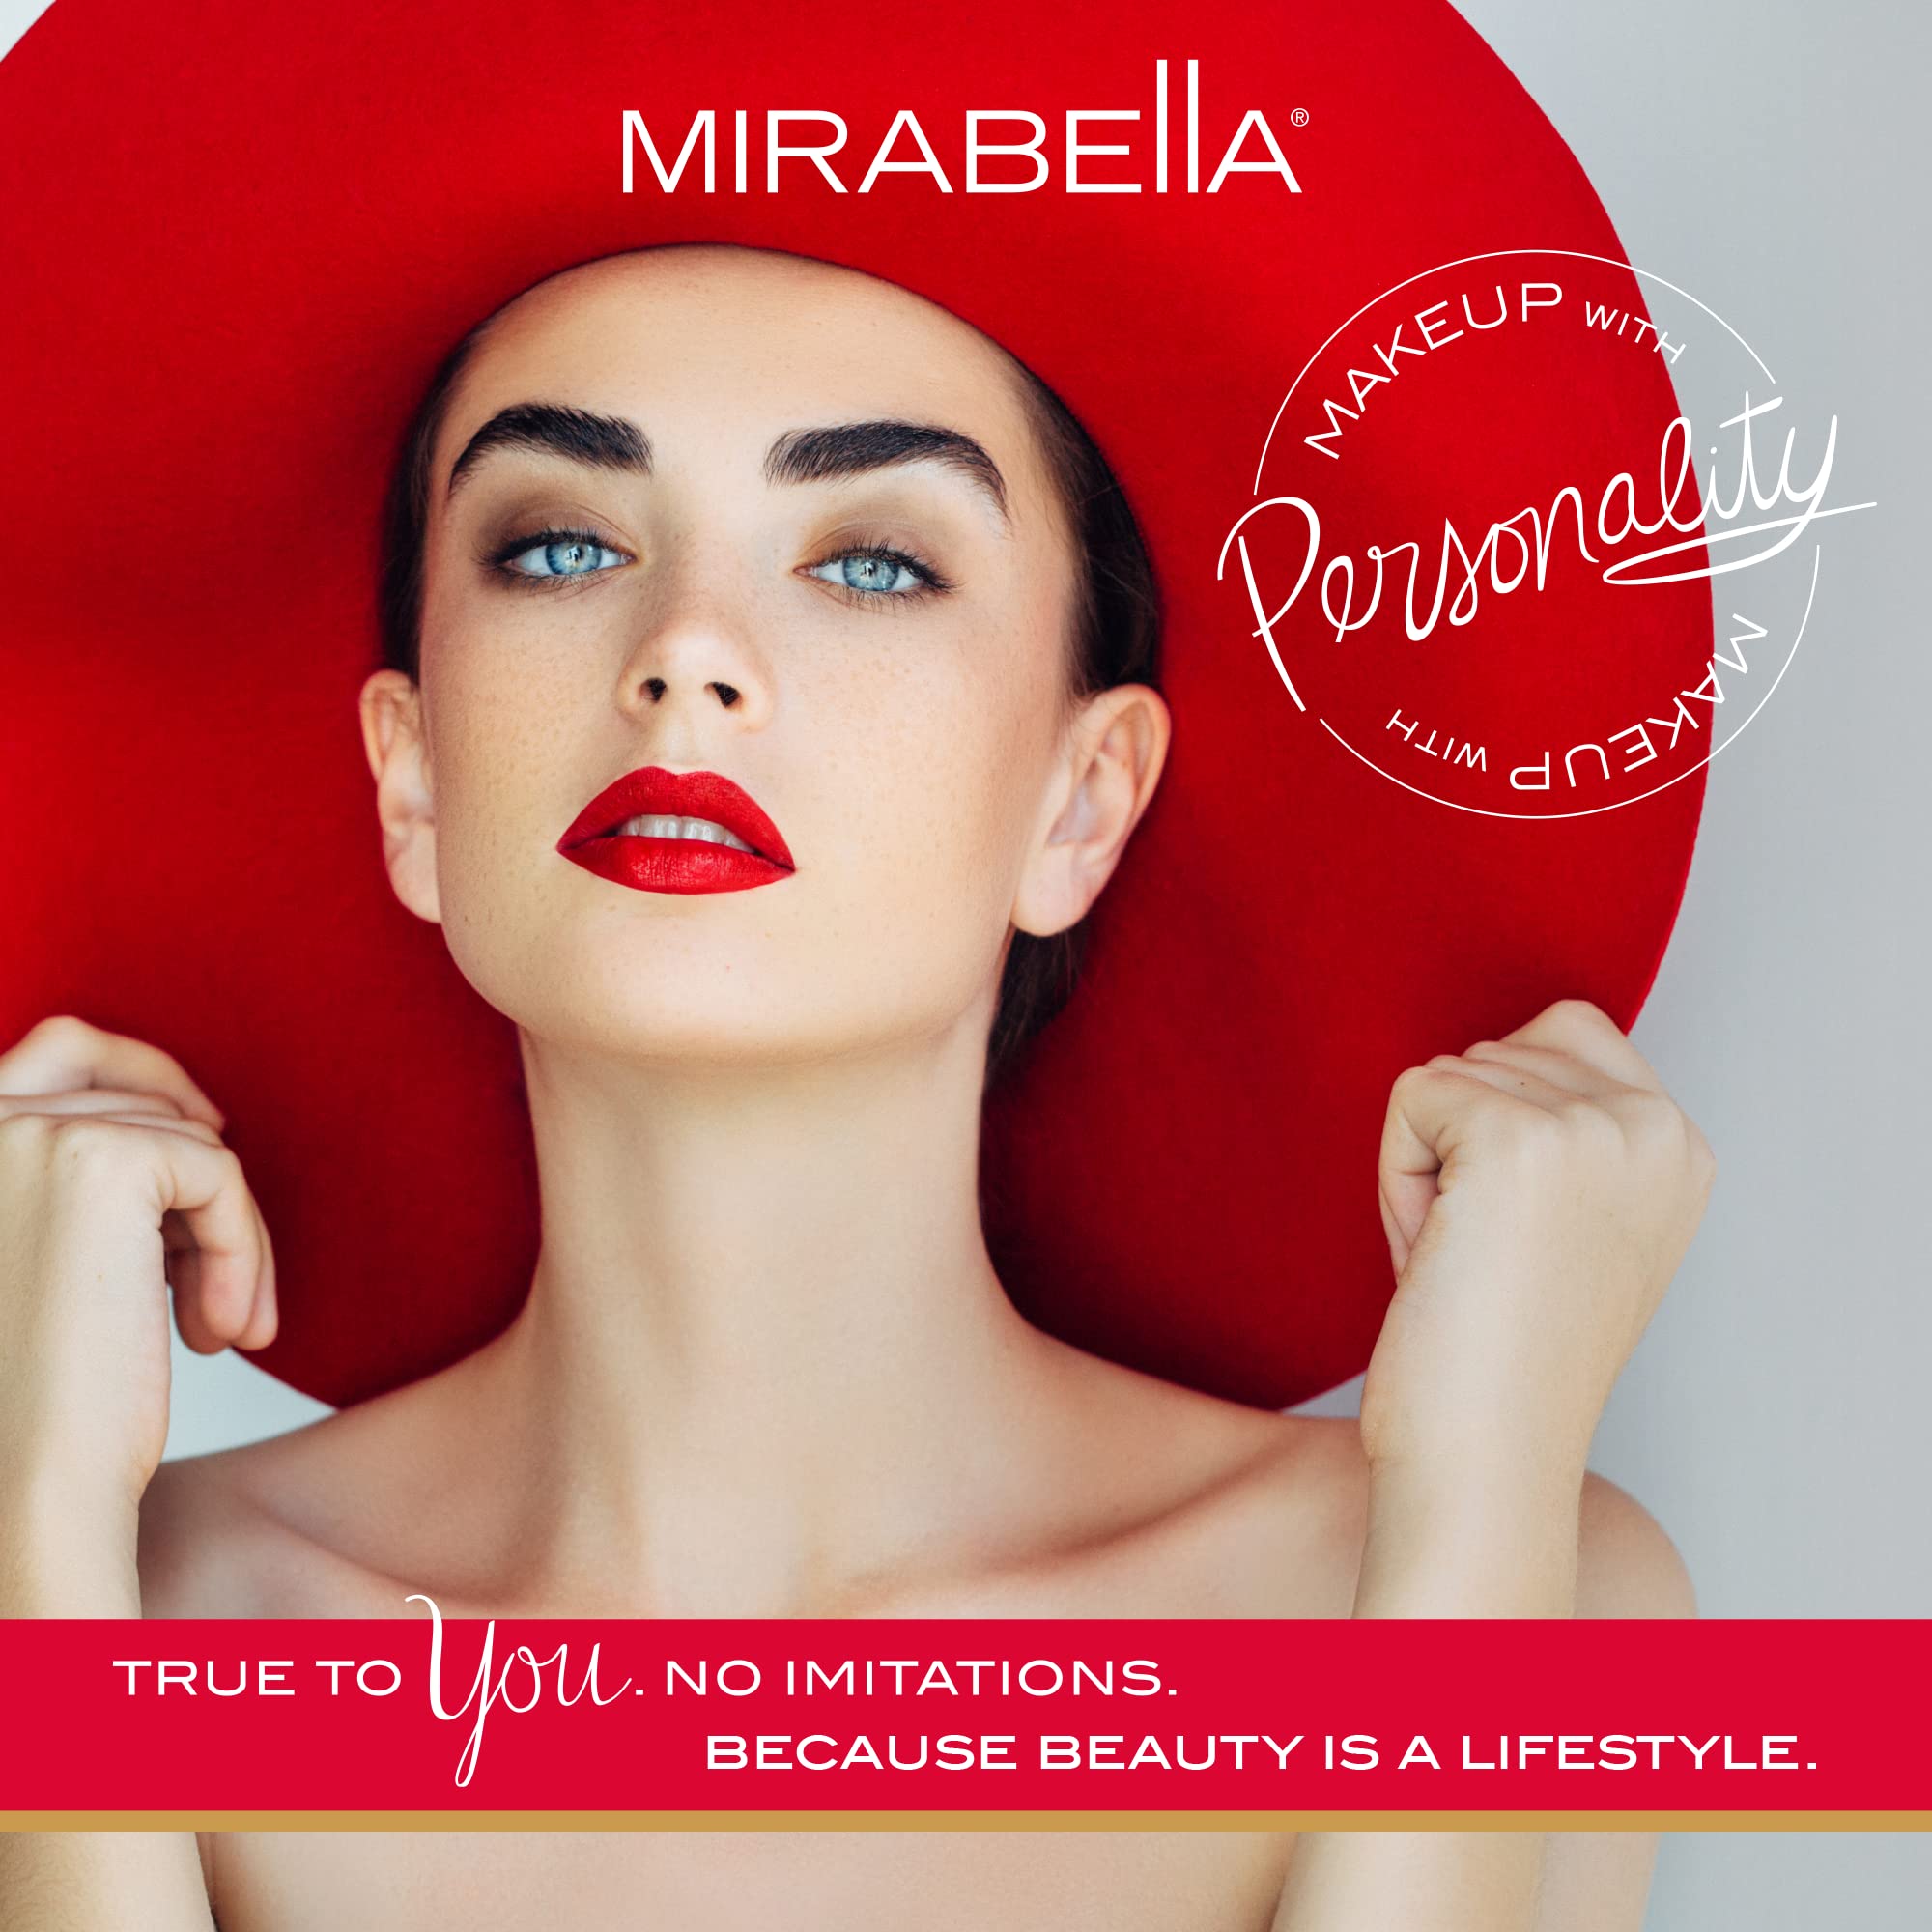 Mirabella Eye Crayon Jumbo Eyeliner, Blackmail (Black) - Smooth Formula Glides and Blends Effortlessly - Waterproof, Ultra-Creamy and High-Pigmented Formula - Paraben & Gluten-free